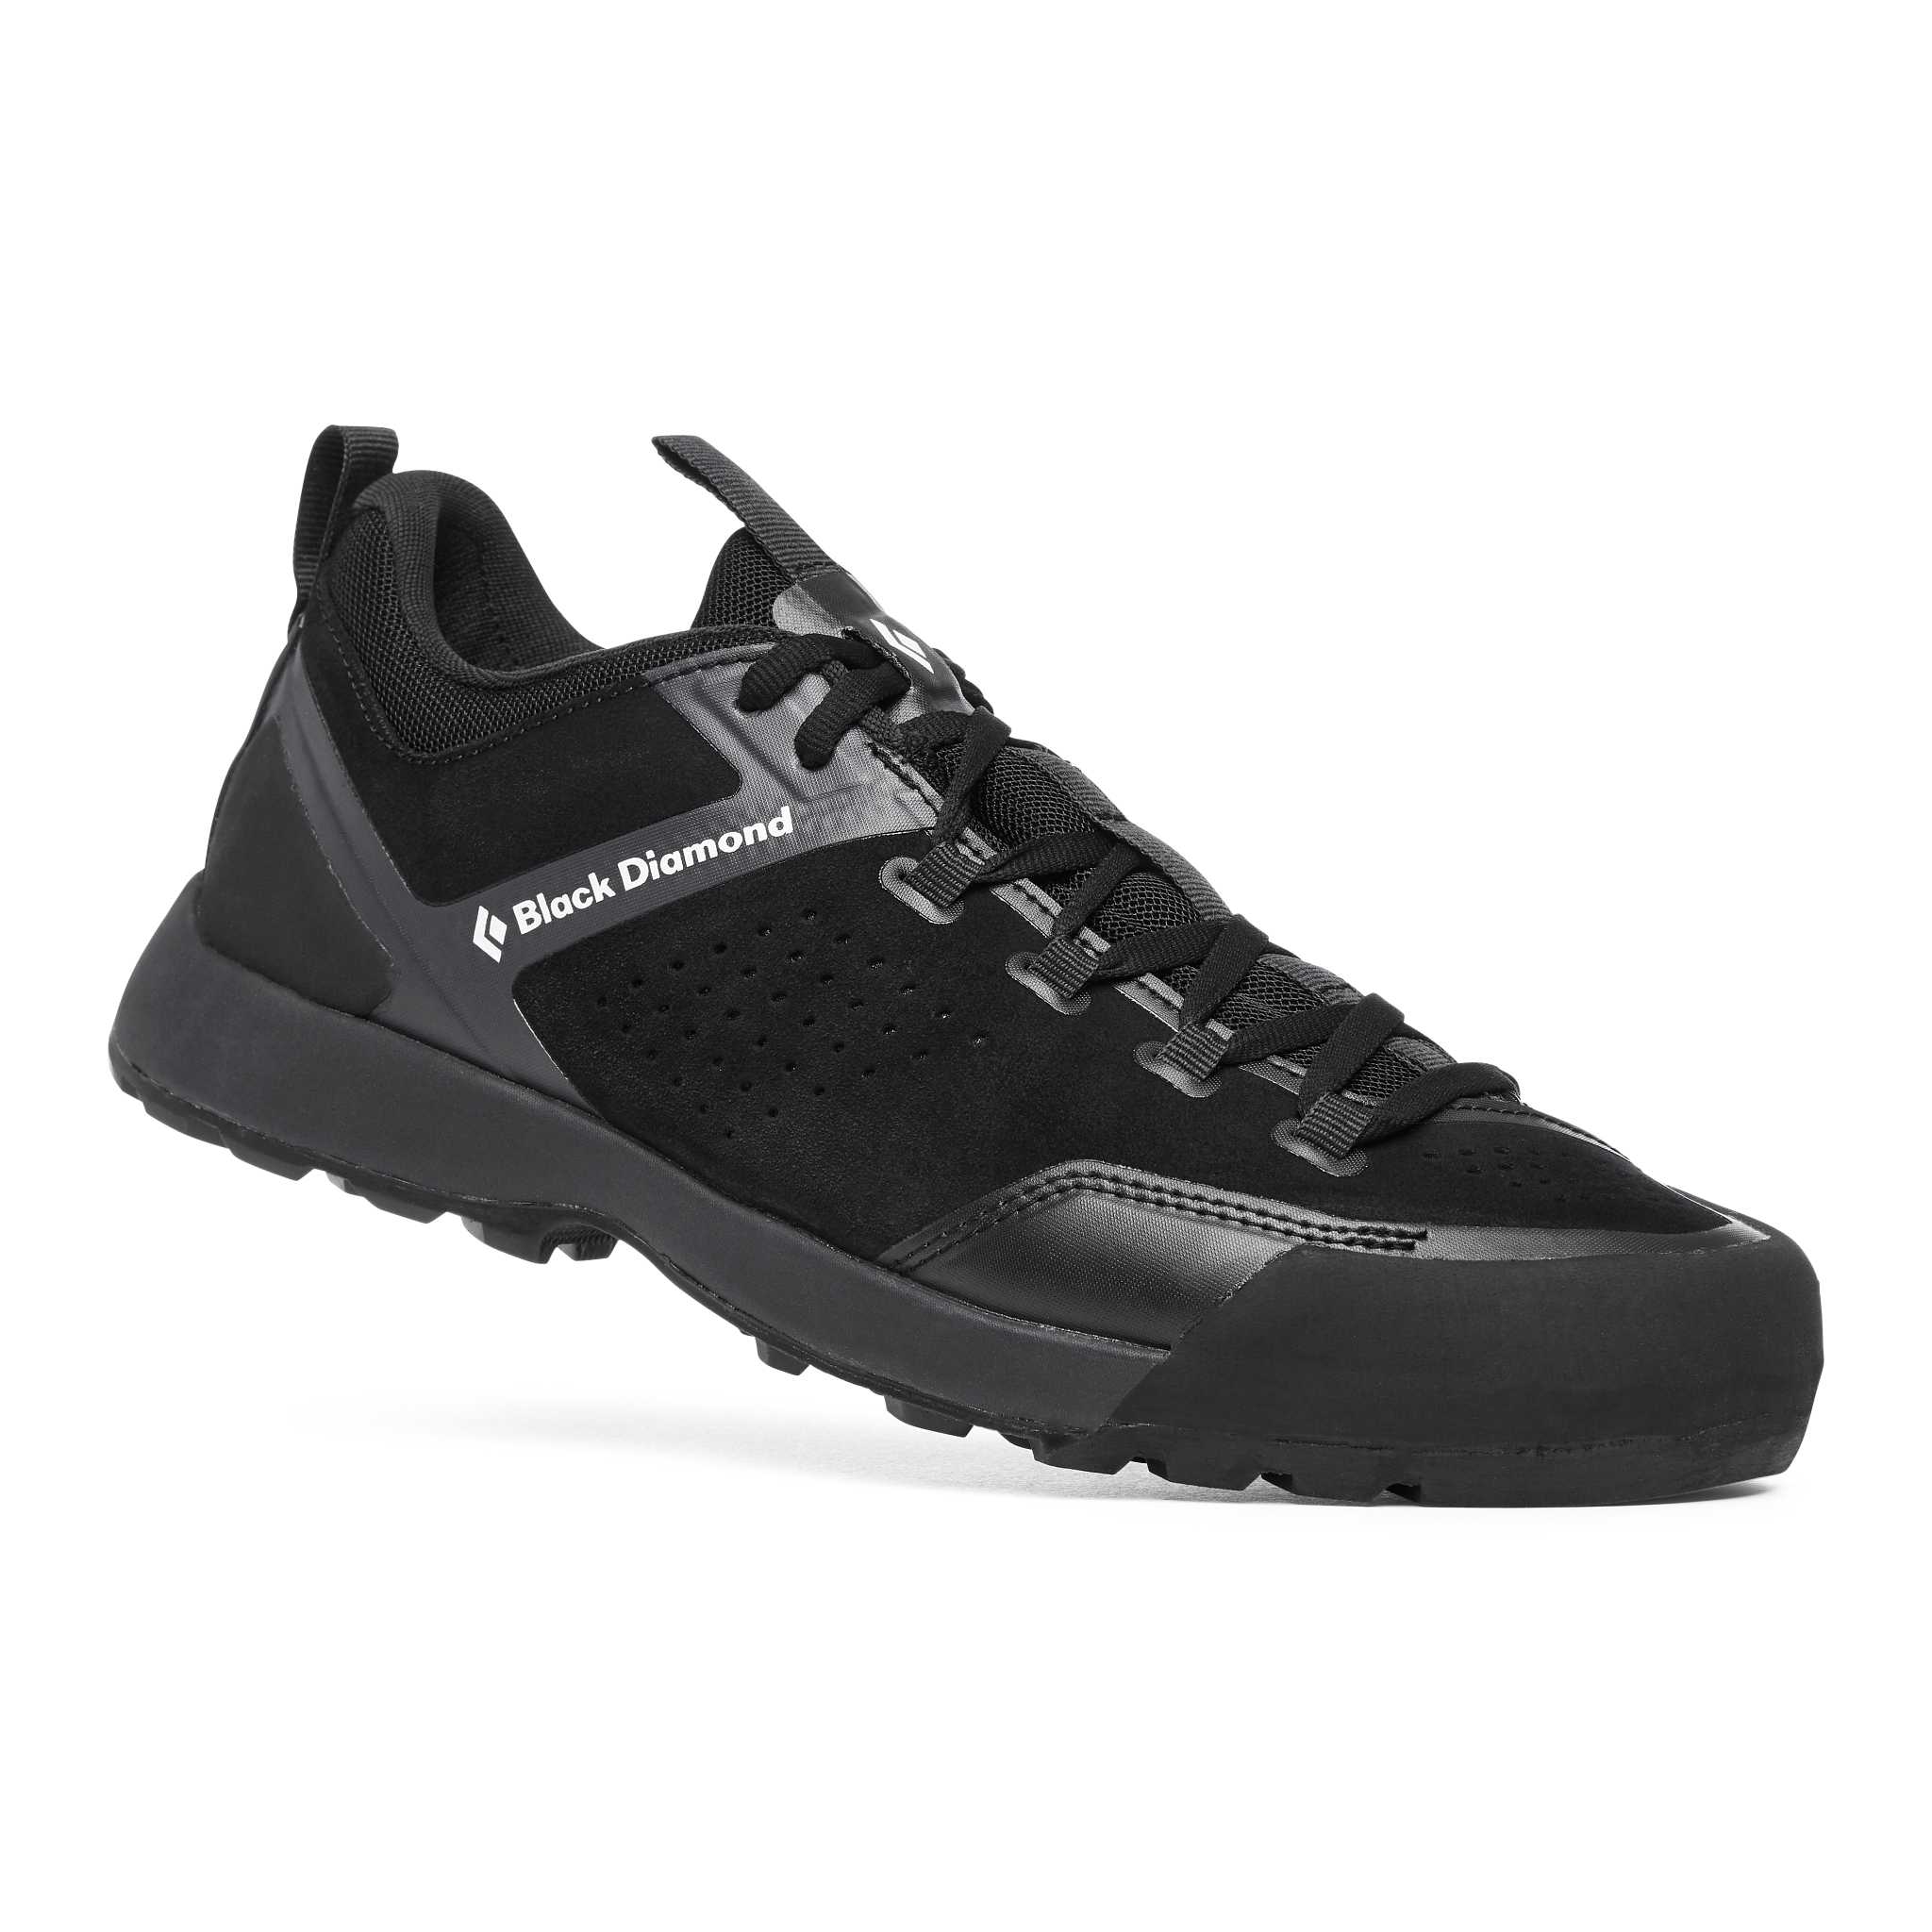 Black Diamond Equipment Men's Mission XP Leather Approach Shoes US 8.5 Black/Granite